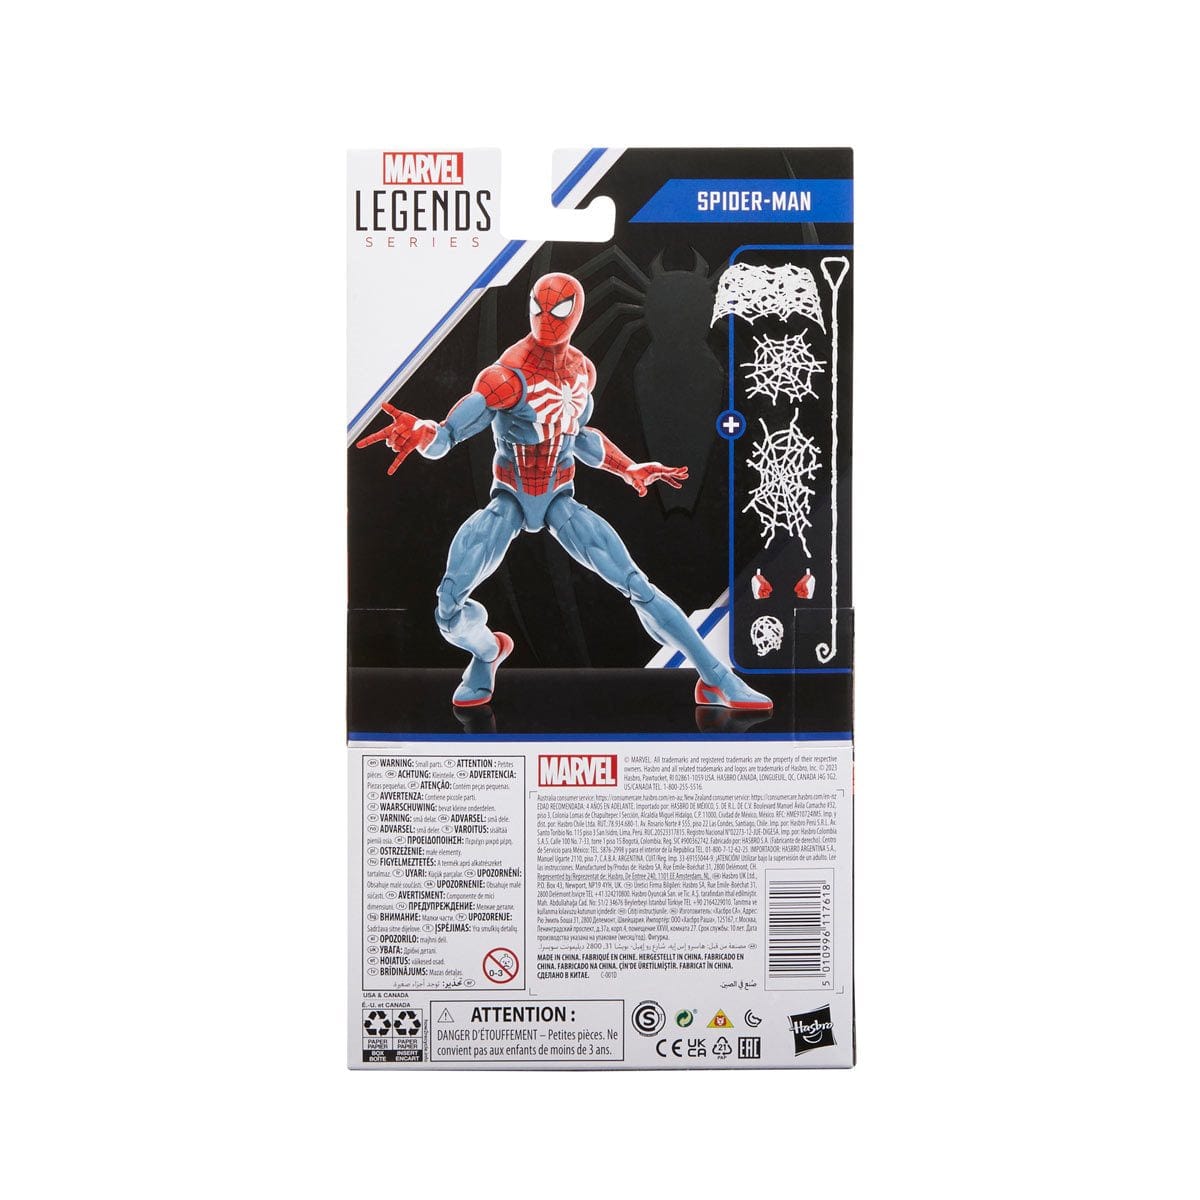 Marvel Legends Gamerverse Spider-Man Artwork box